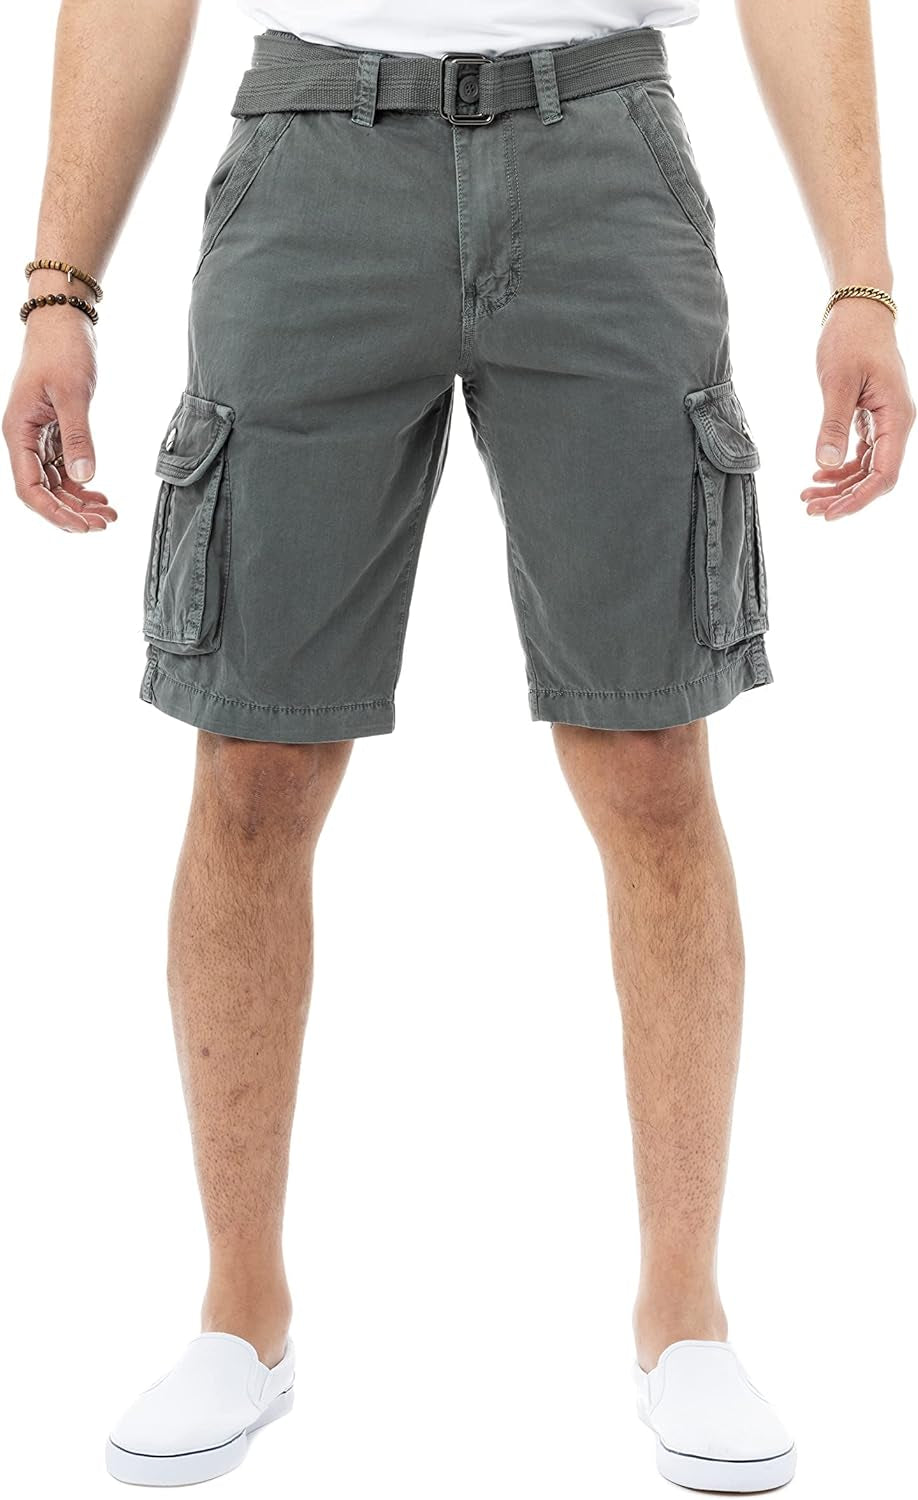 RAWX cargo shorts